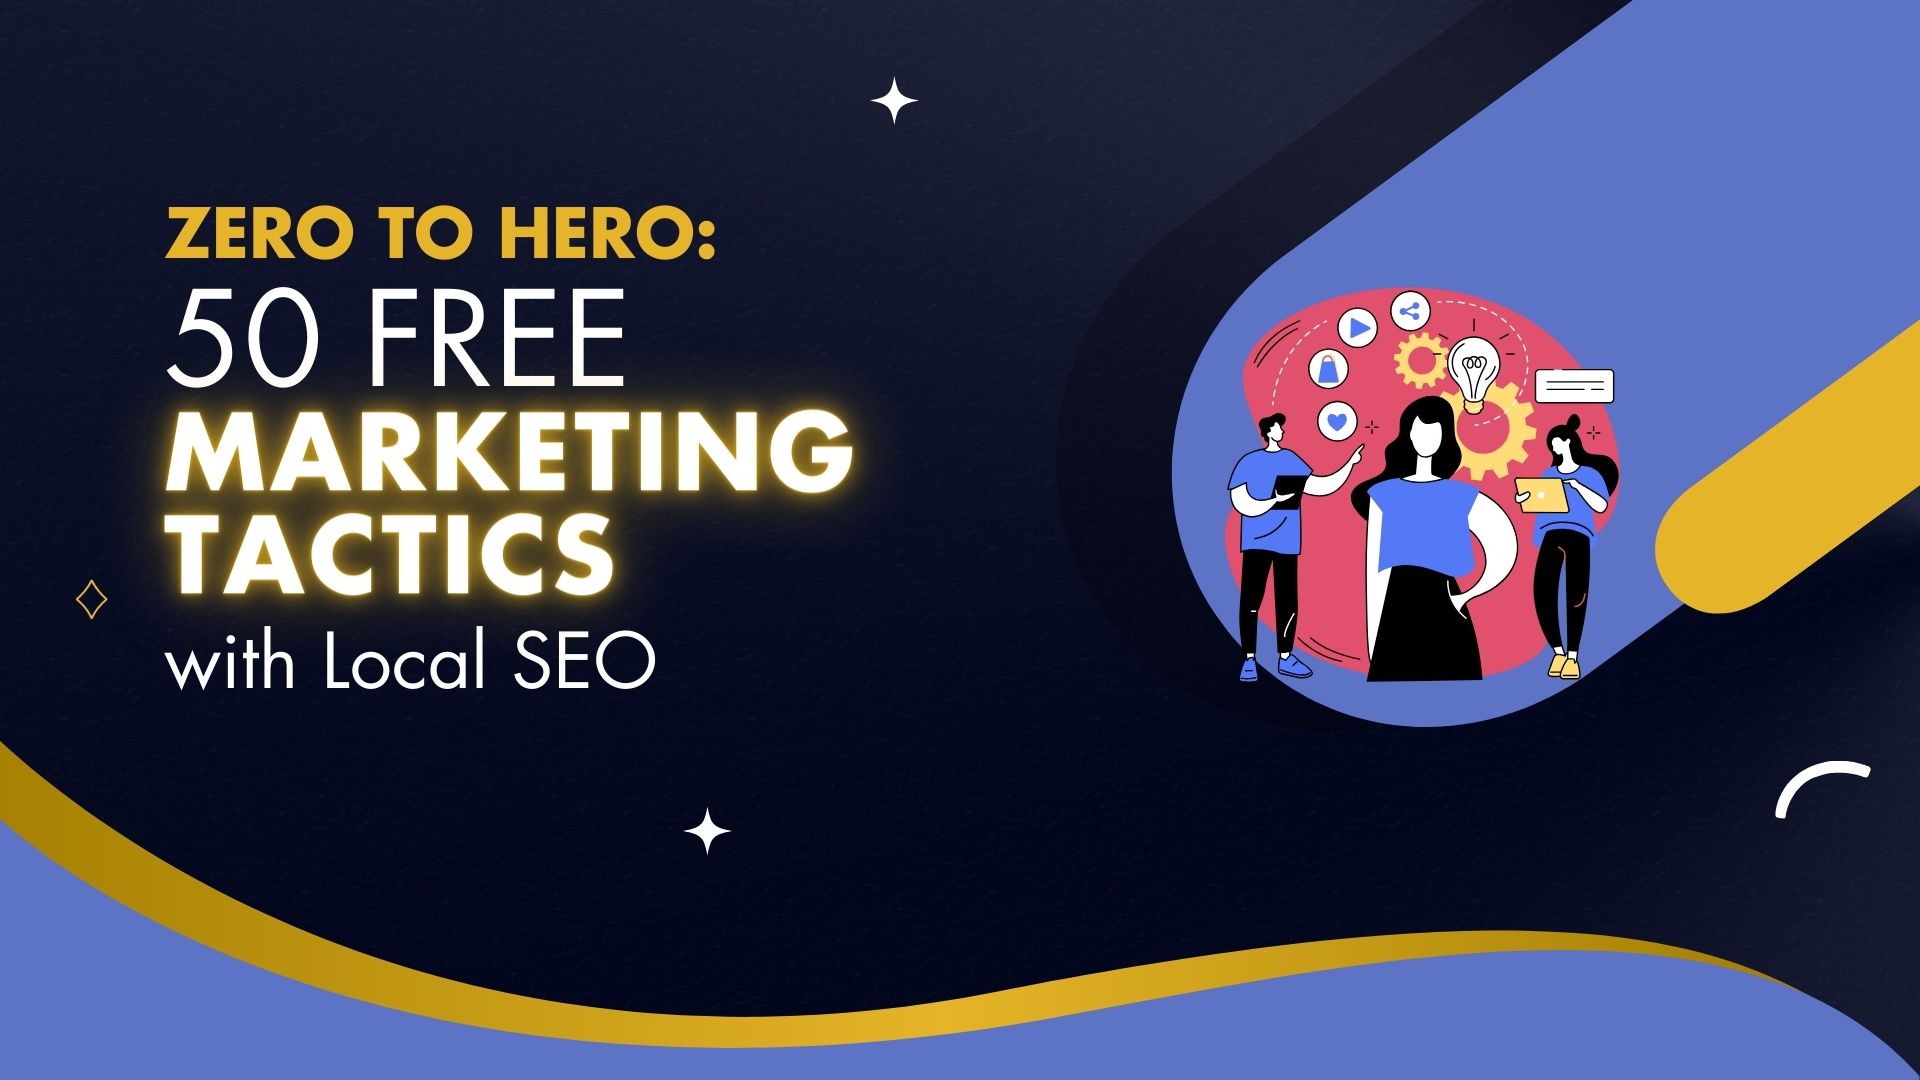 Zero to Hero: 50 Free Marketing Tactics for Local Businesses